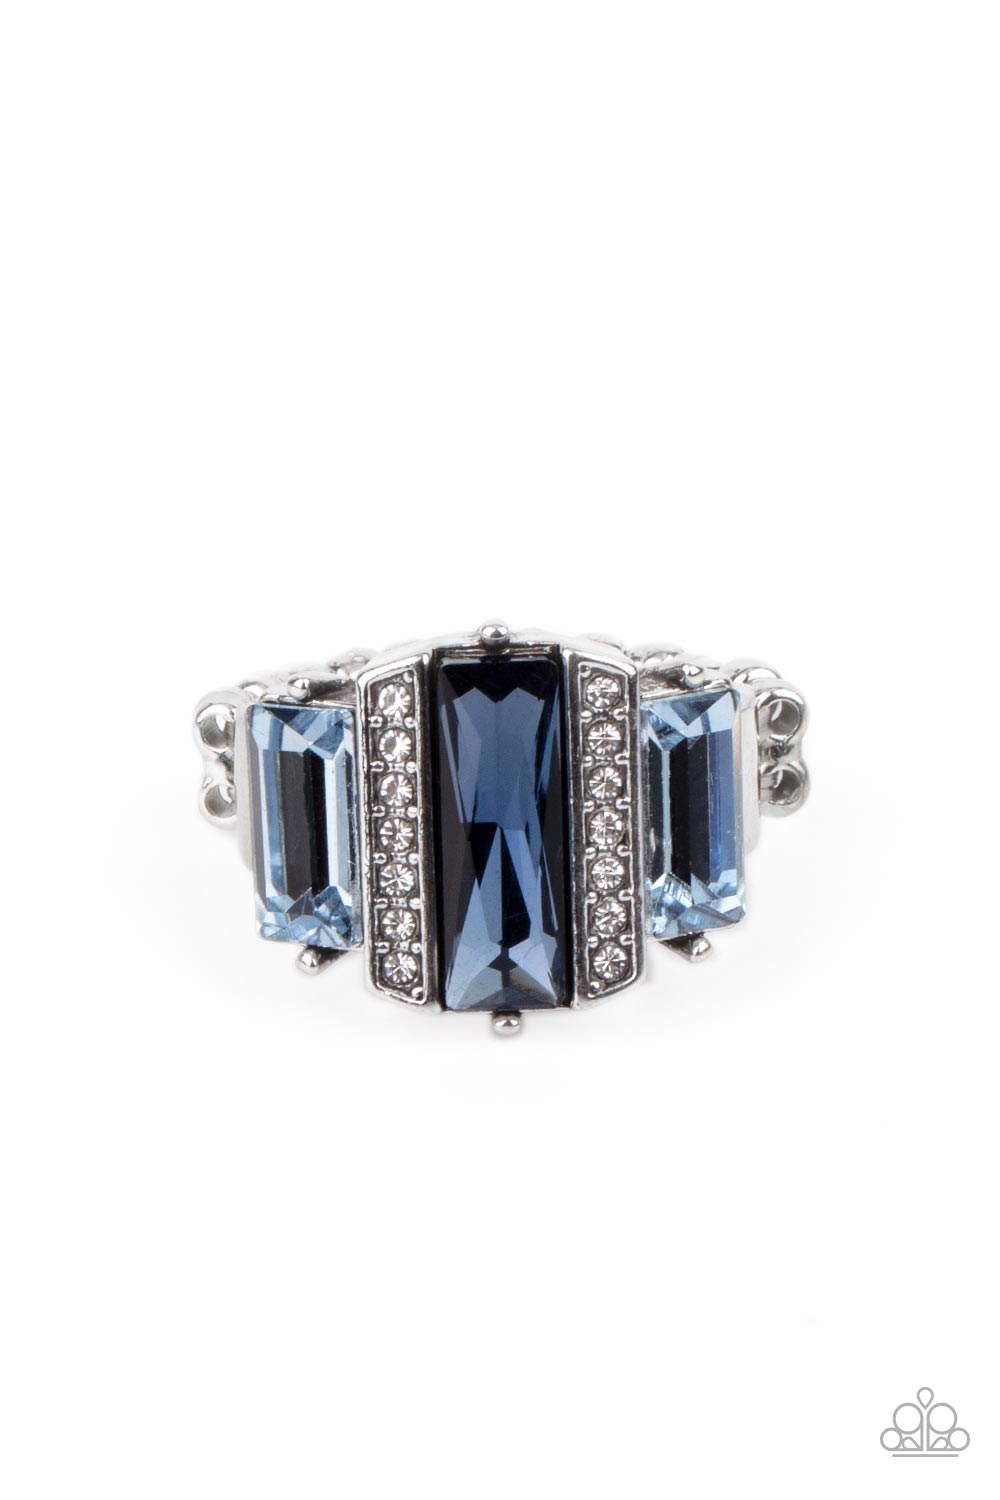 A GLITZY Verdict Blue Rhinestone Ring - Paparazzi Accessories- lightbox - CarasShop.com - $5 Jewelry by Cara Jewels